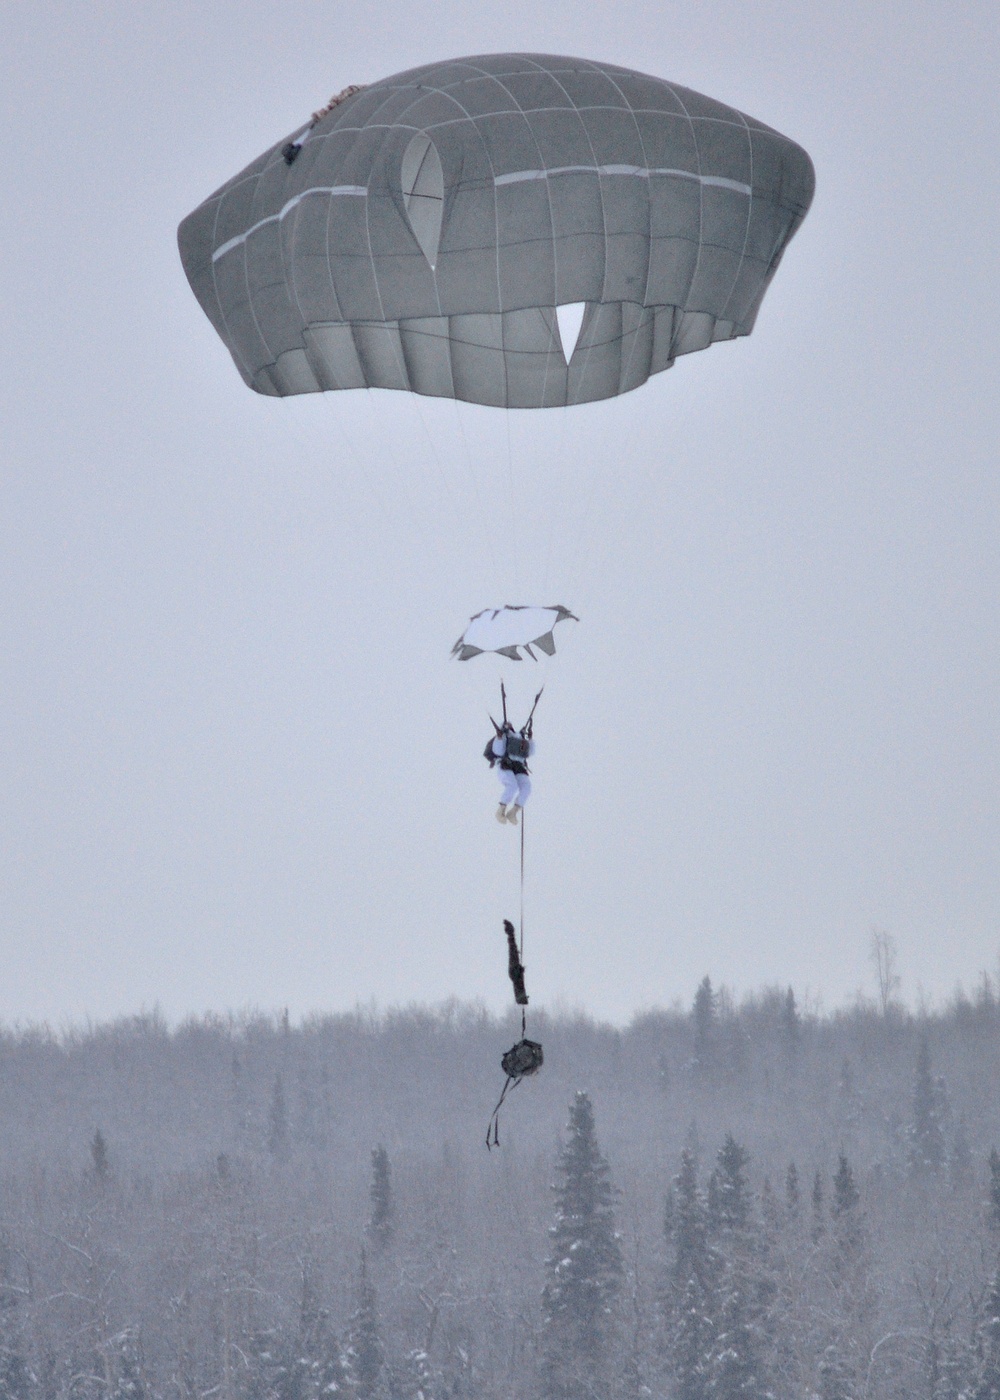 Spartan paratroopers jump in Arctic gear